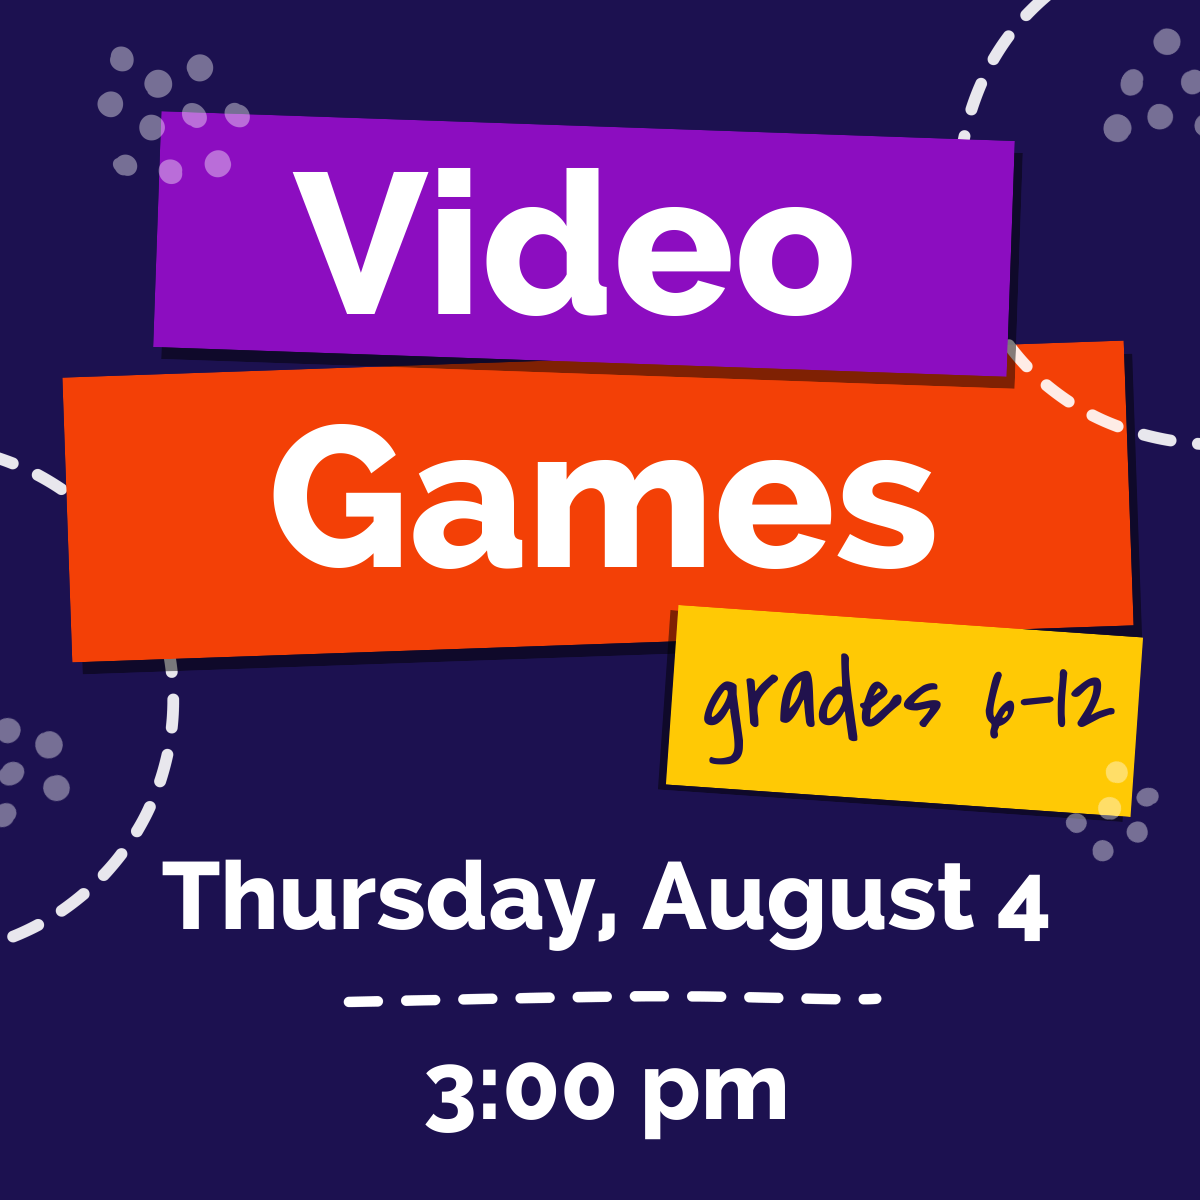 Video Games grades 6-12 Thursday, August 4 3:00pm